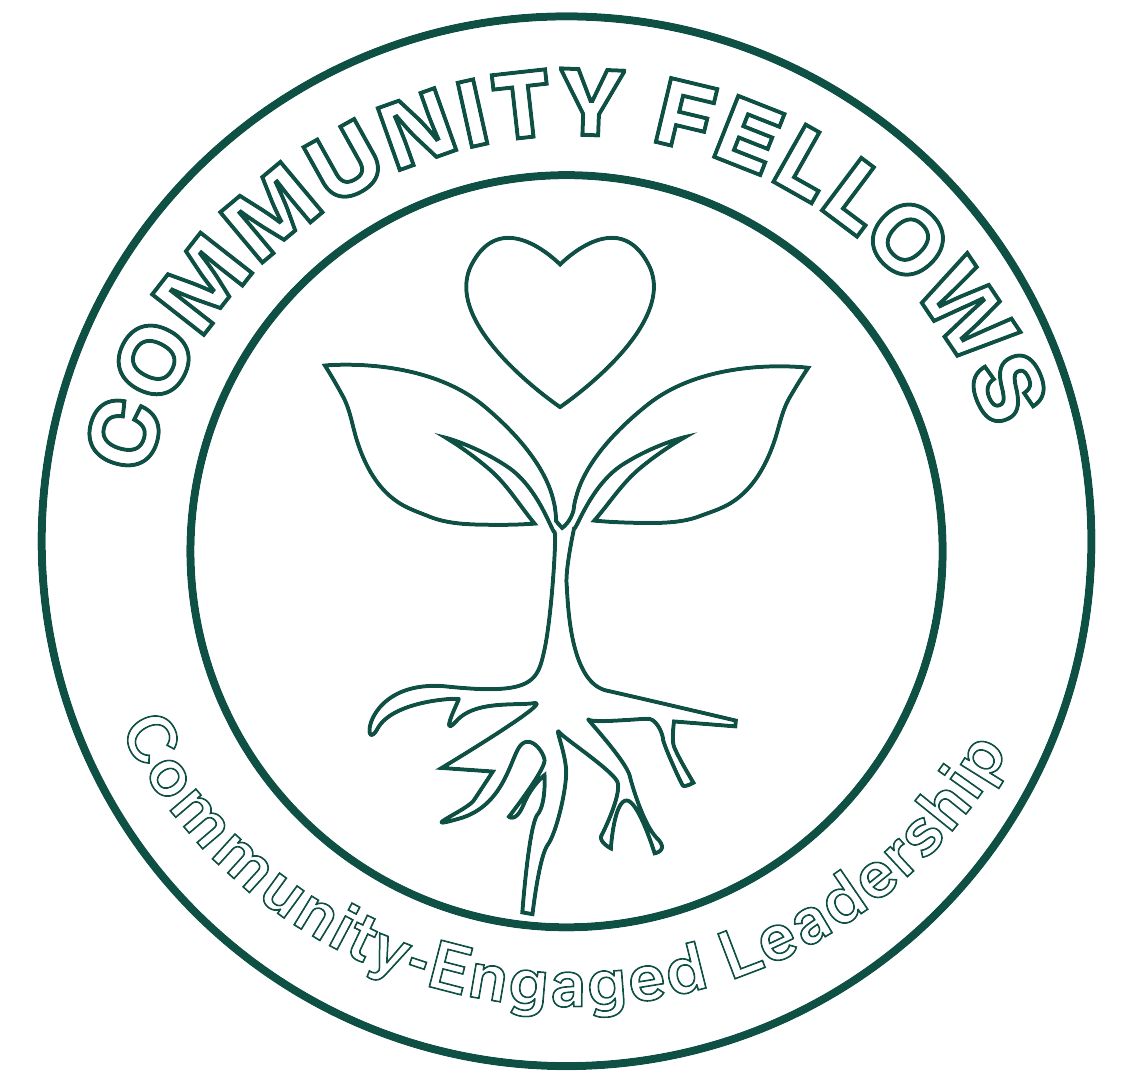 Community Fellows Logos outline 04